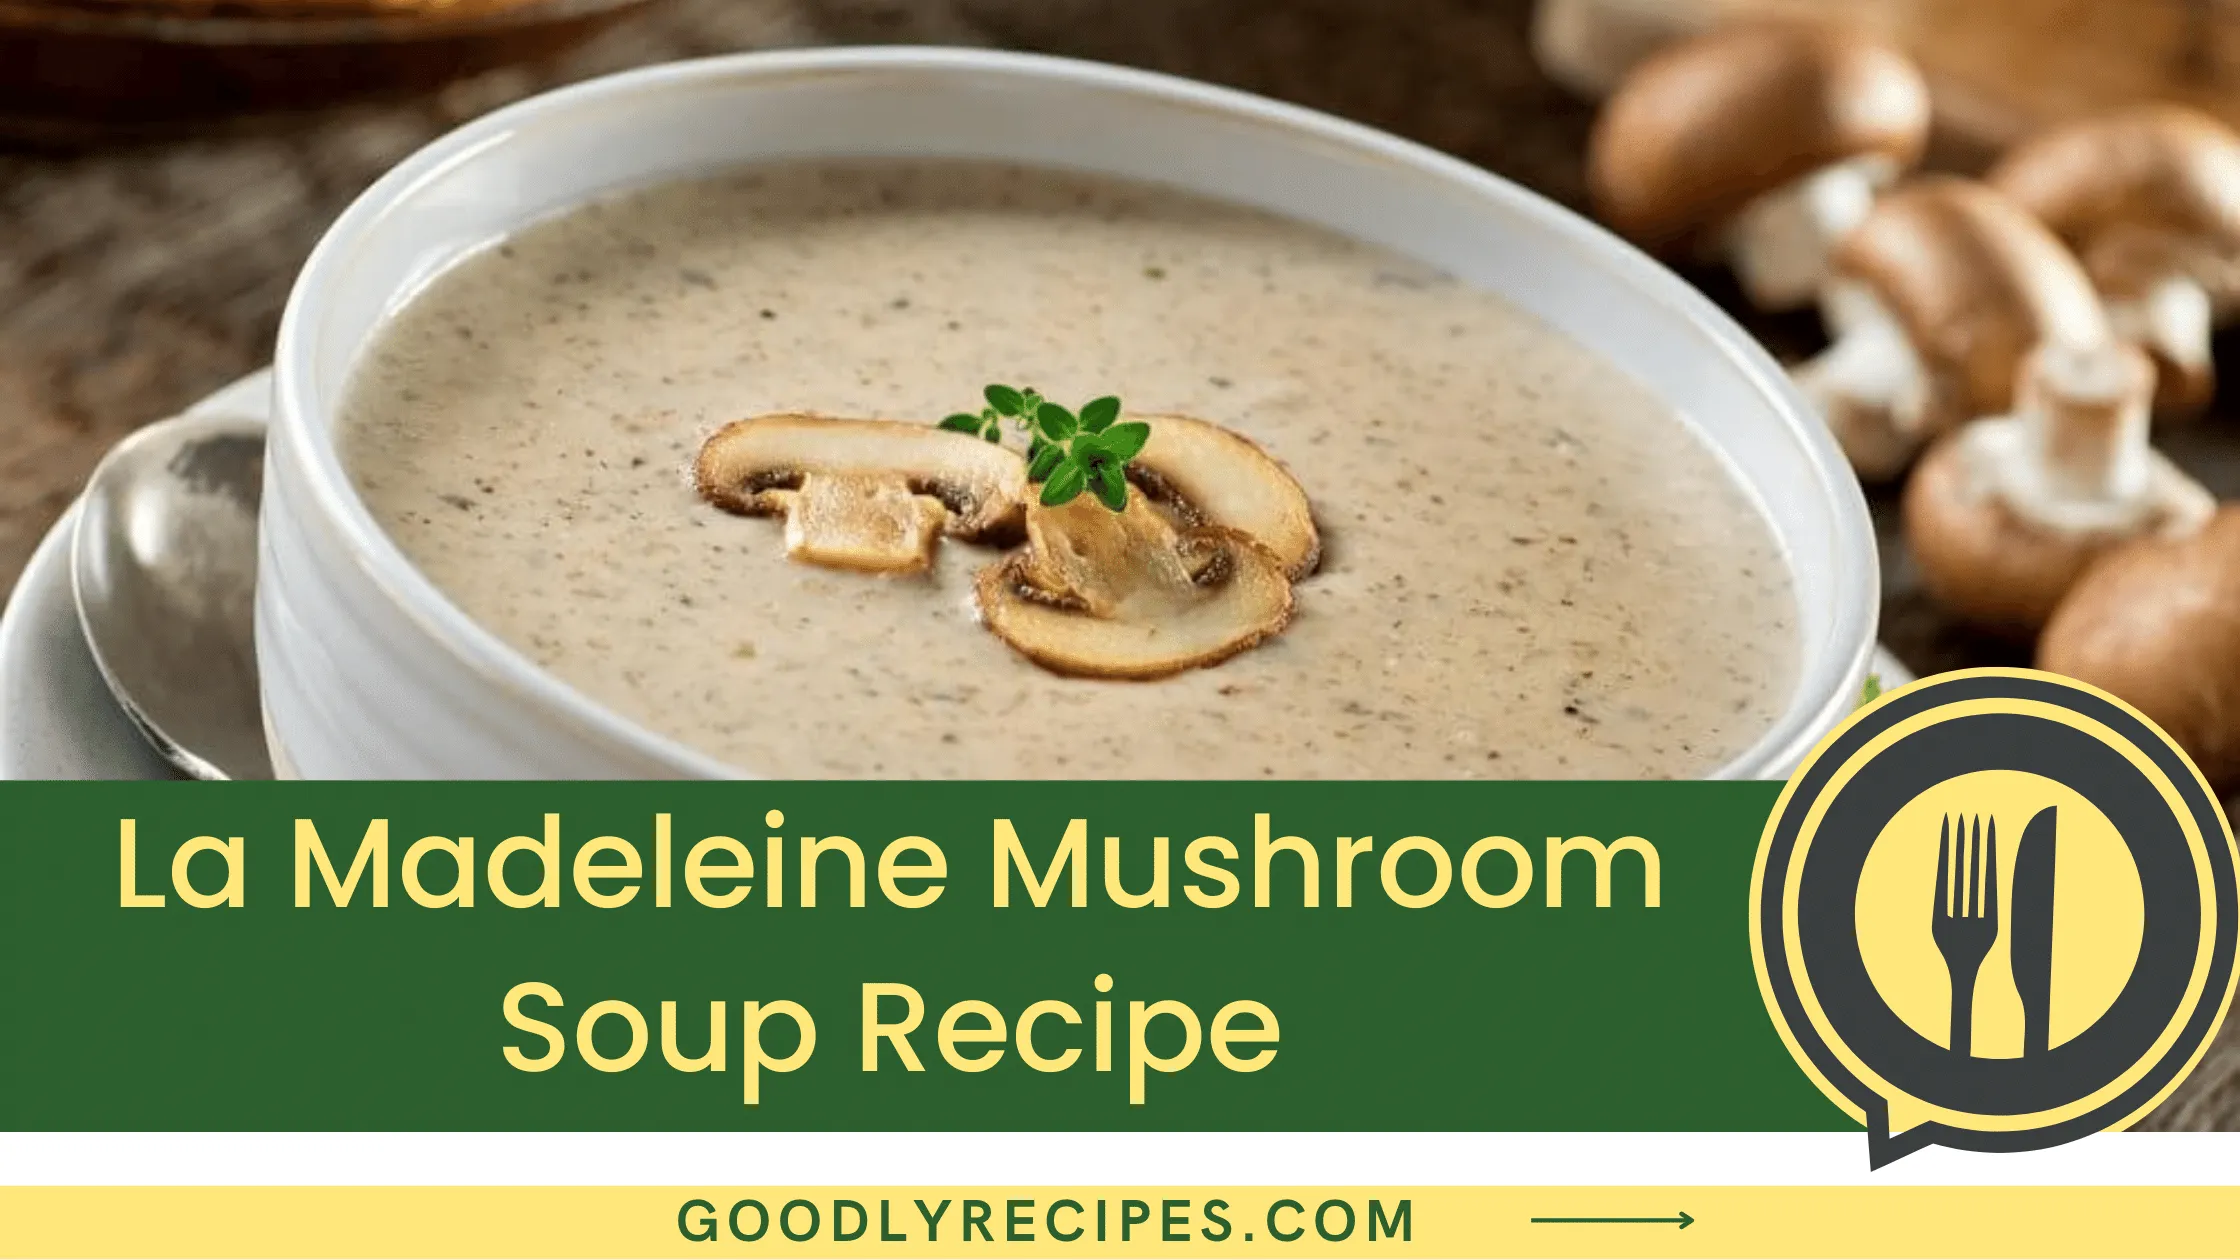 What is La Madeleine Mushroom Soup?